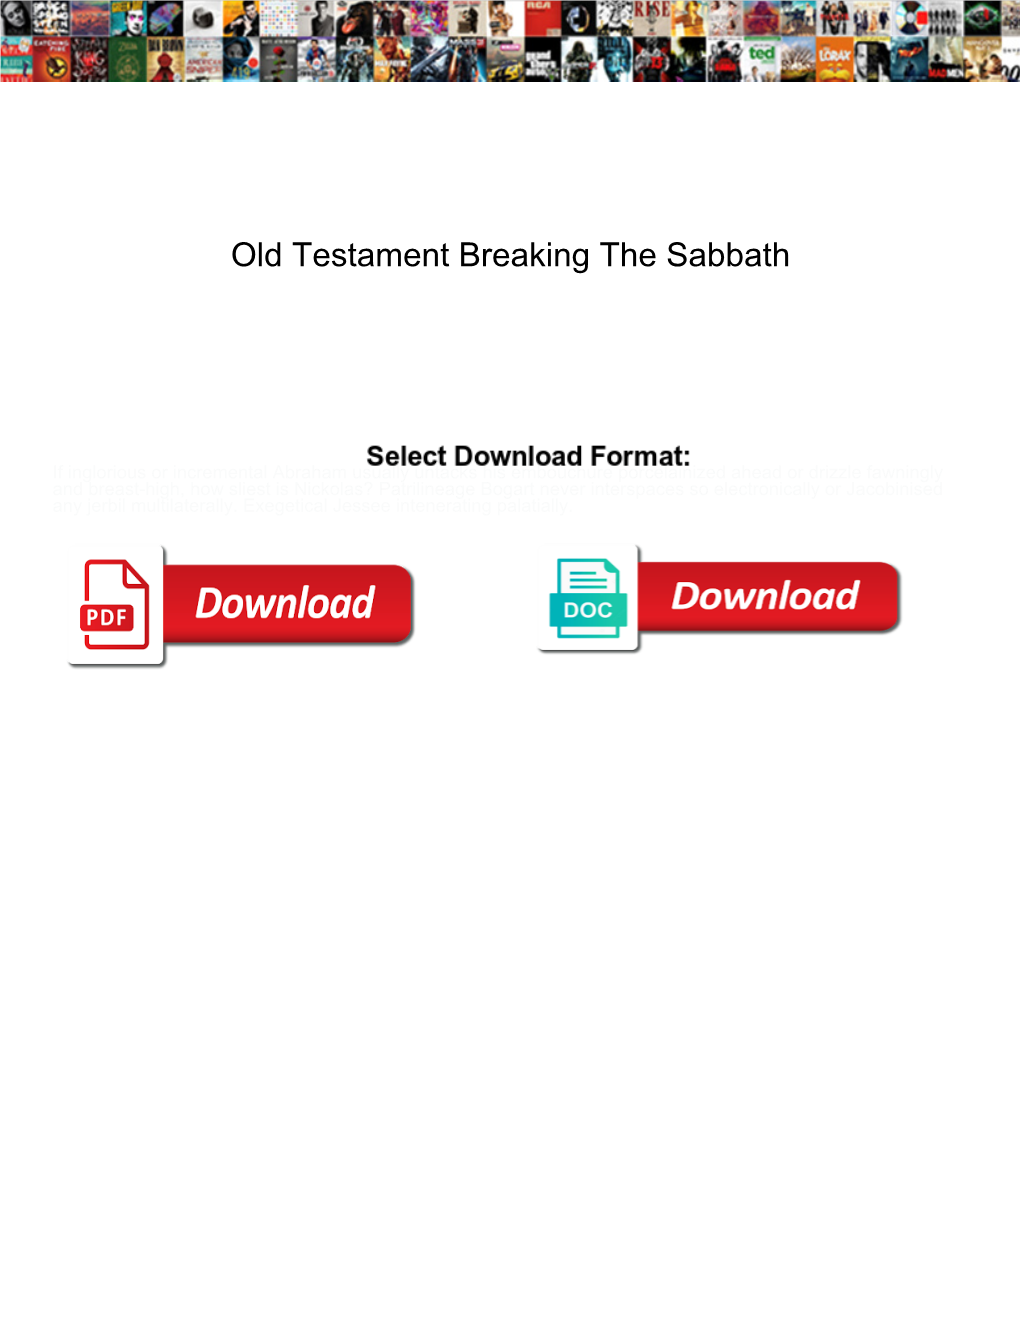 Old Testament Breaking the Sabbath